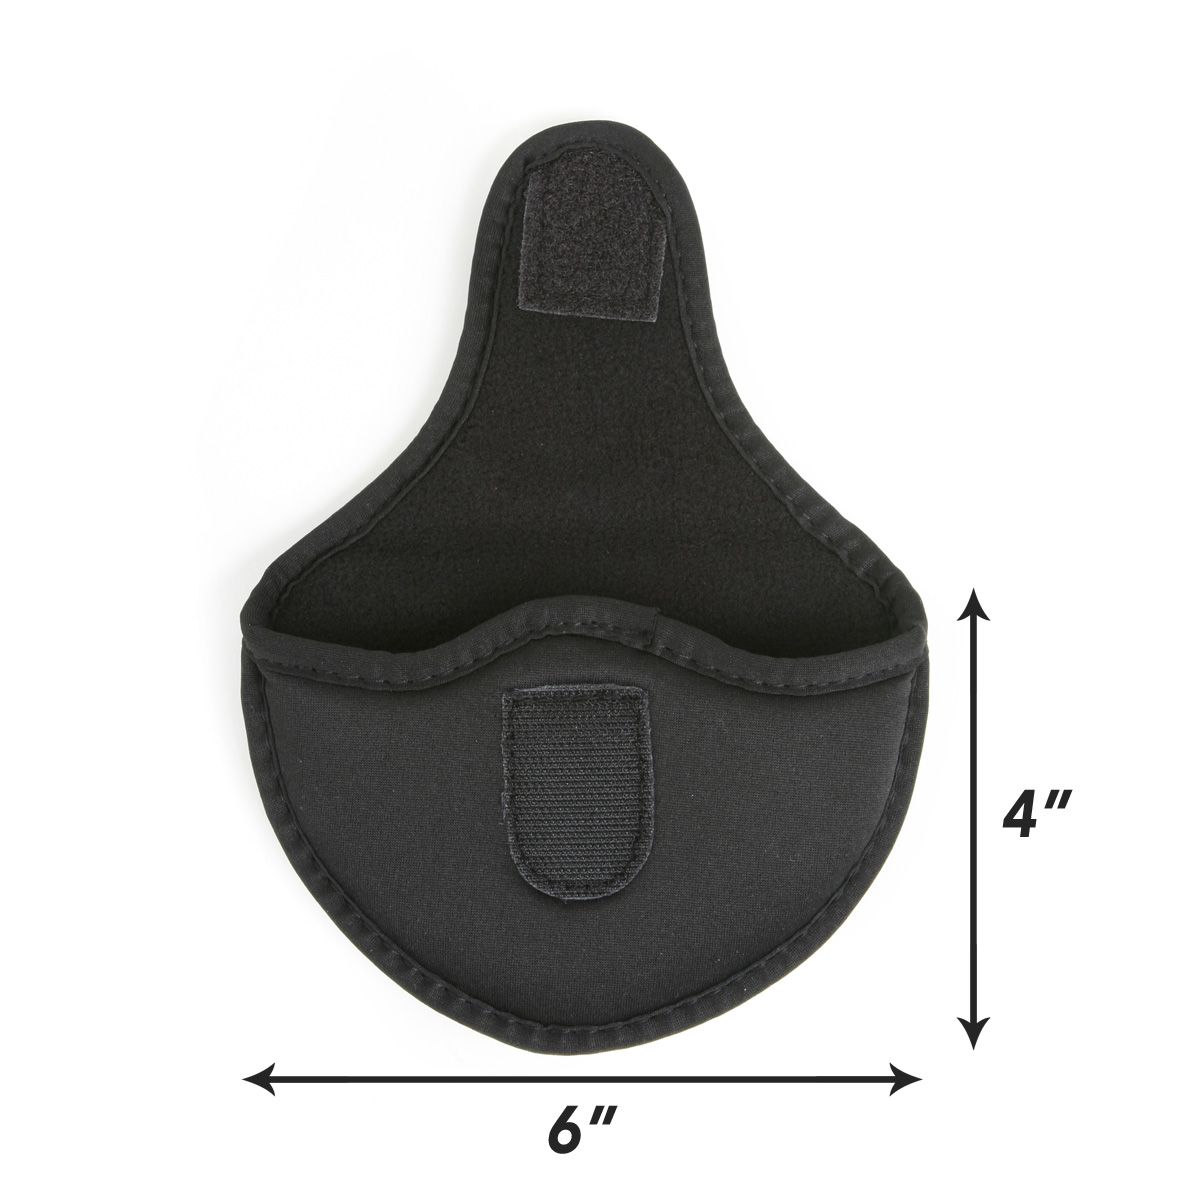 Oversize Mallet Putter Headcover - Black